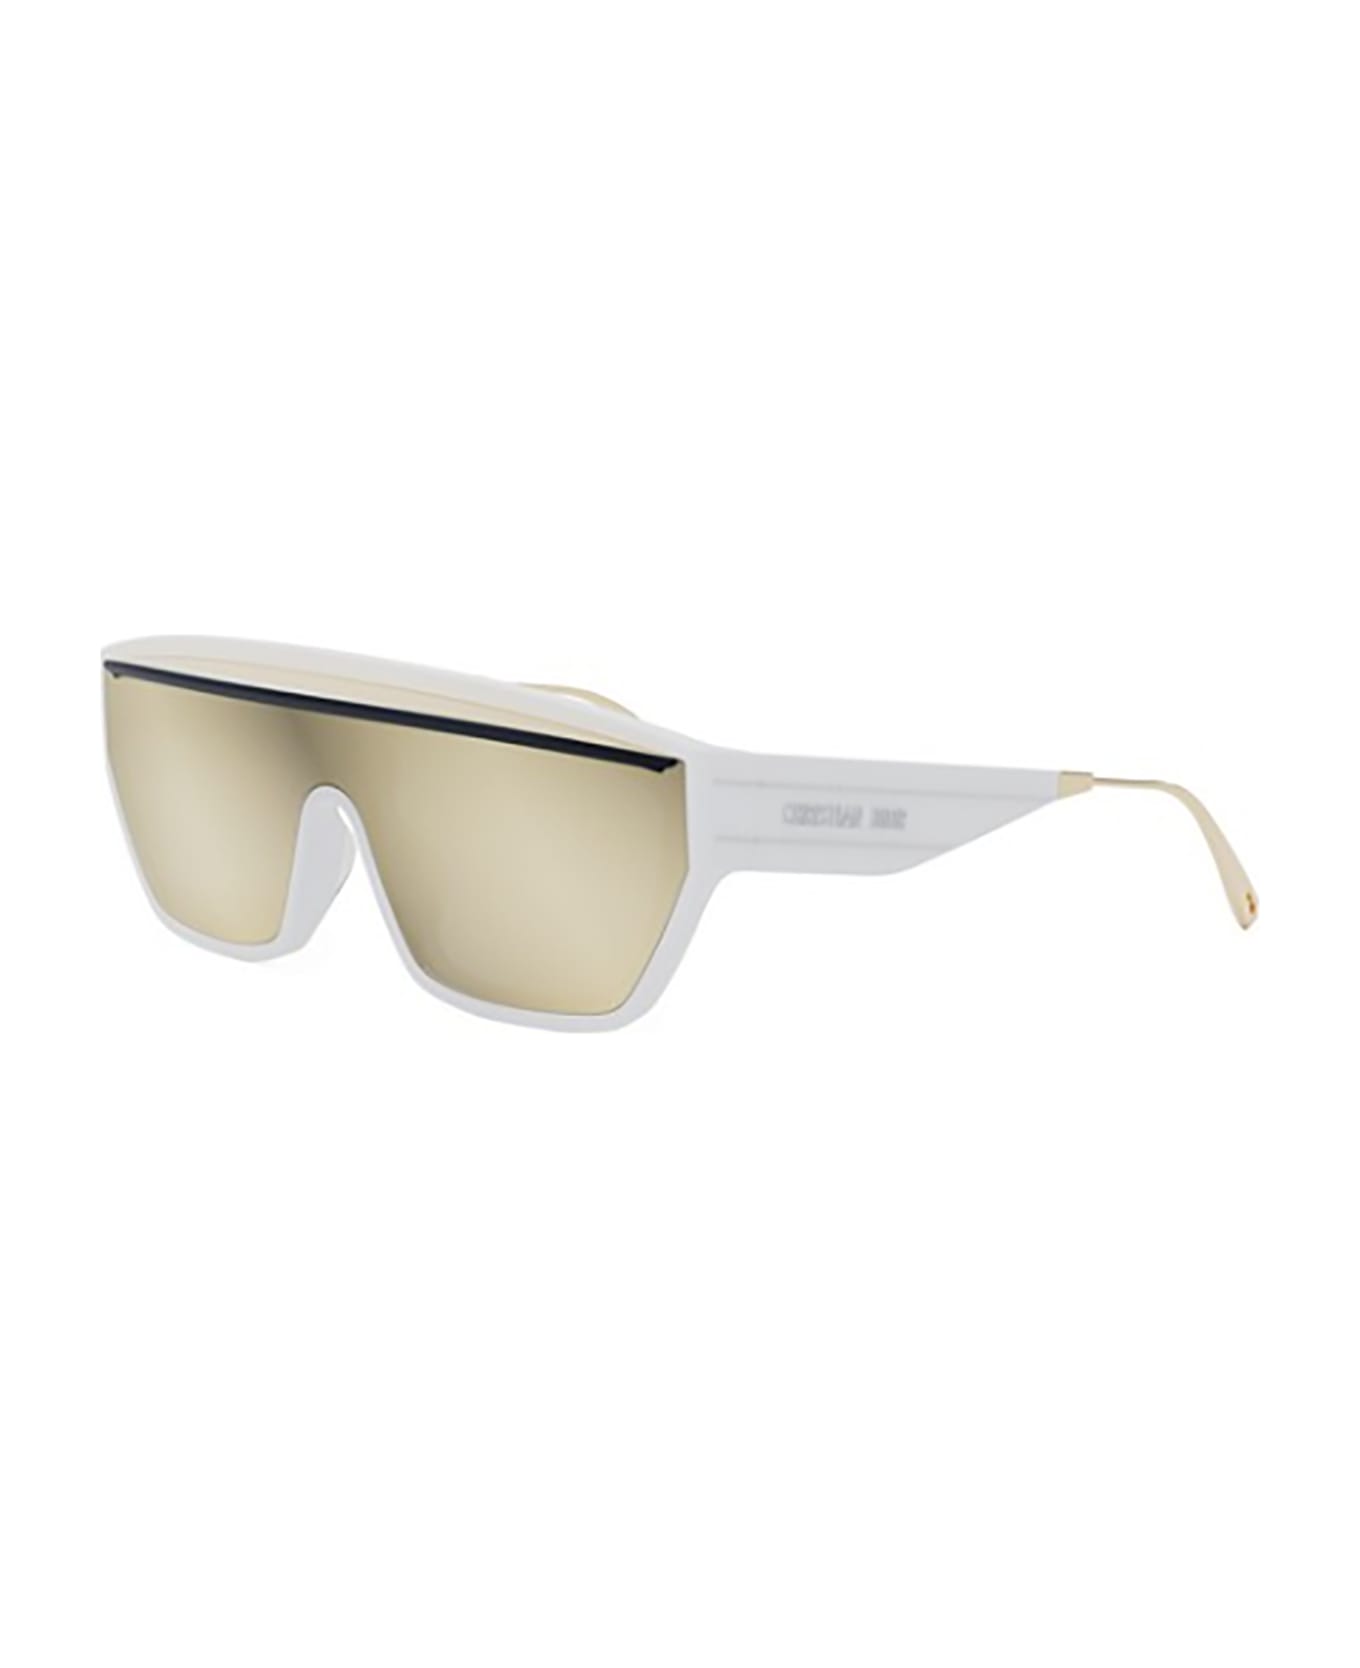 Dior CLUB M7U Sunglasses サングラス